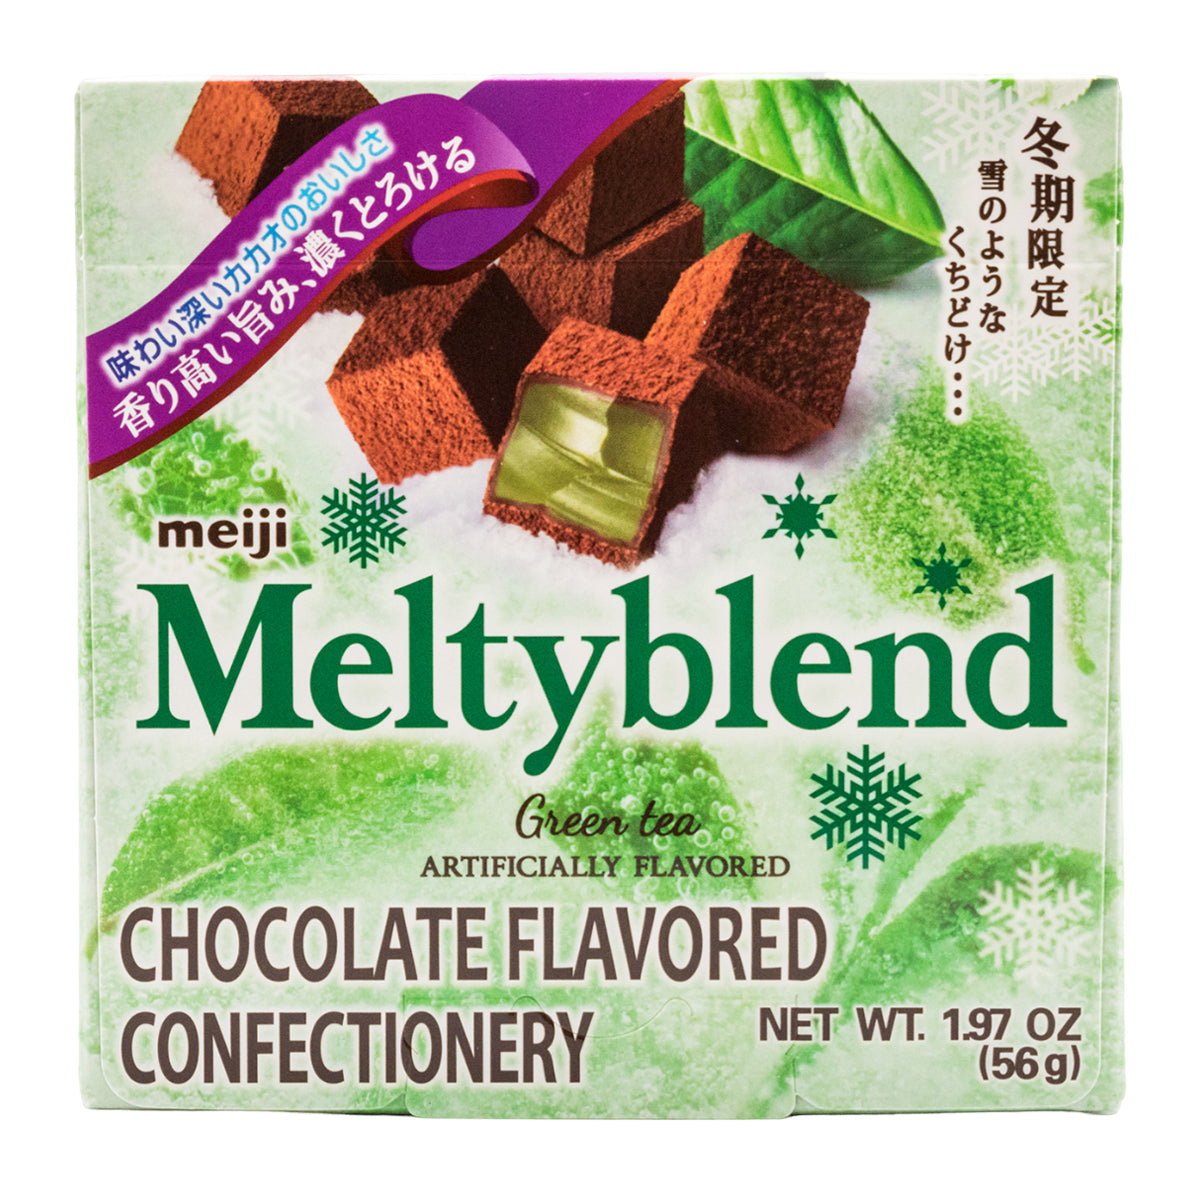 meltyblend green tea chocolate - 1.97oz